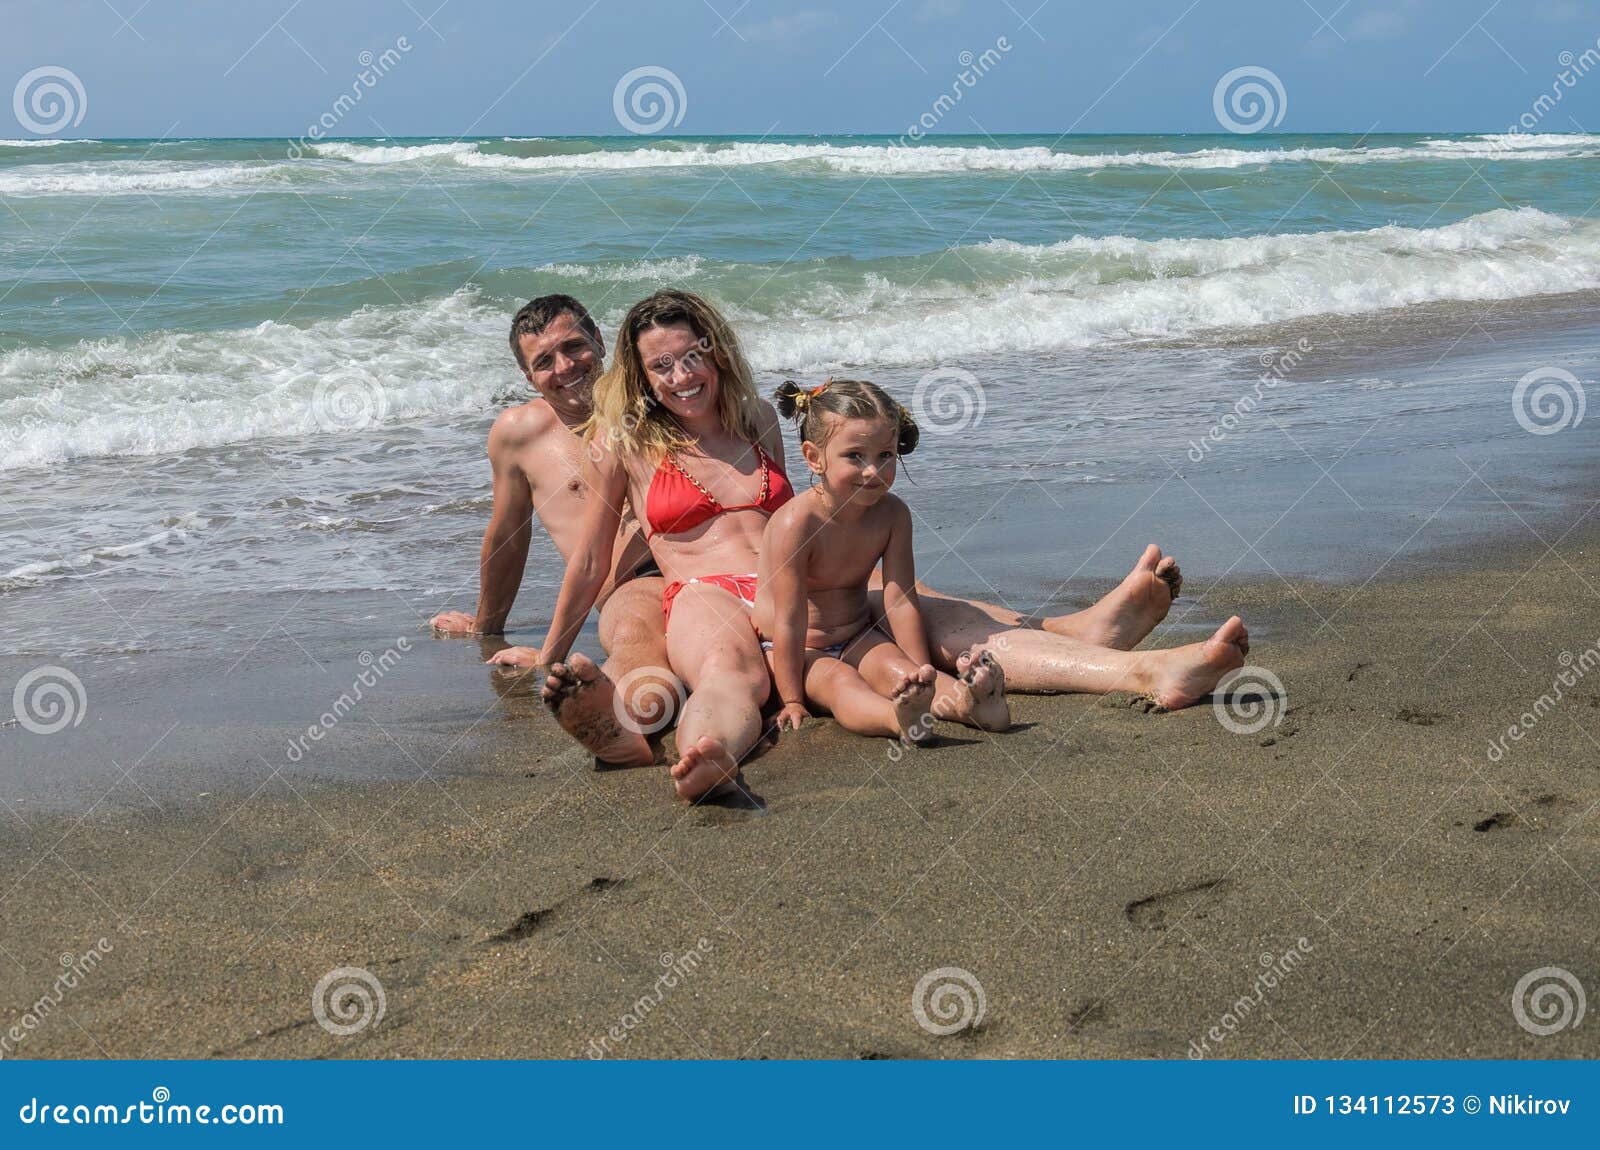 amber easton nude beach